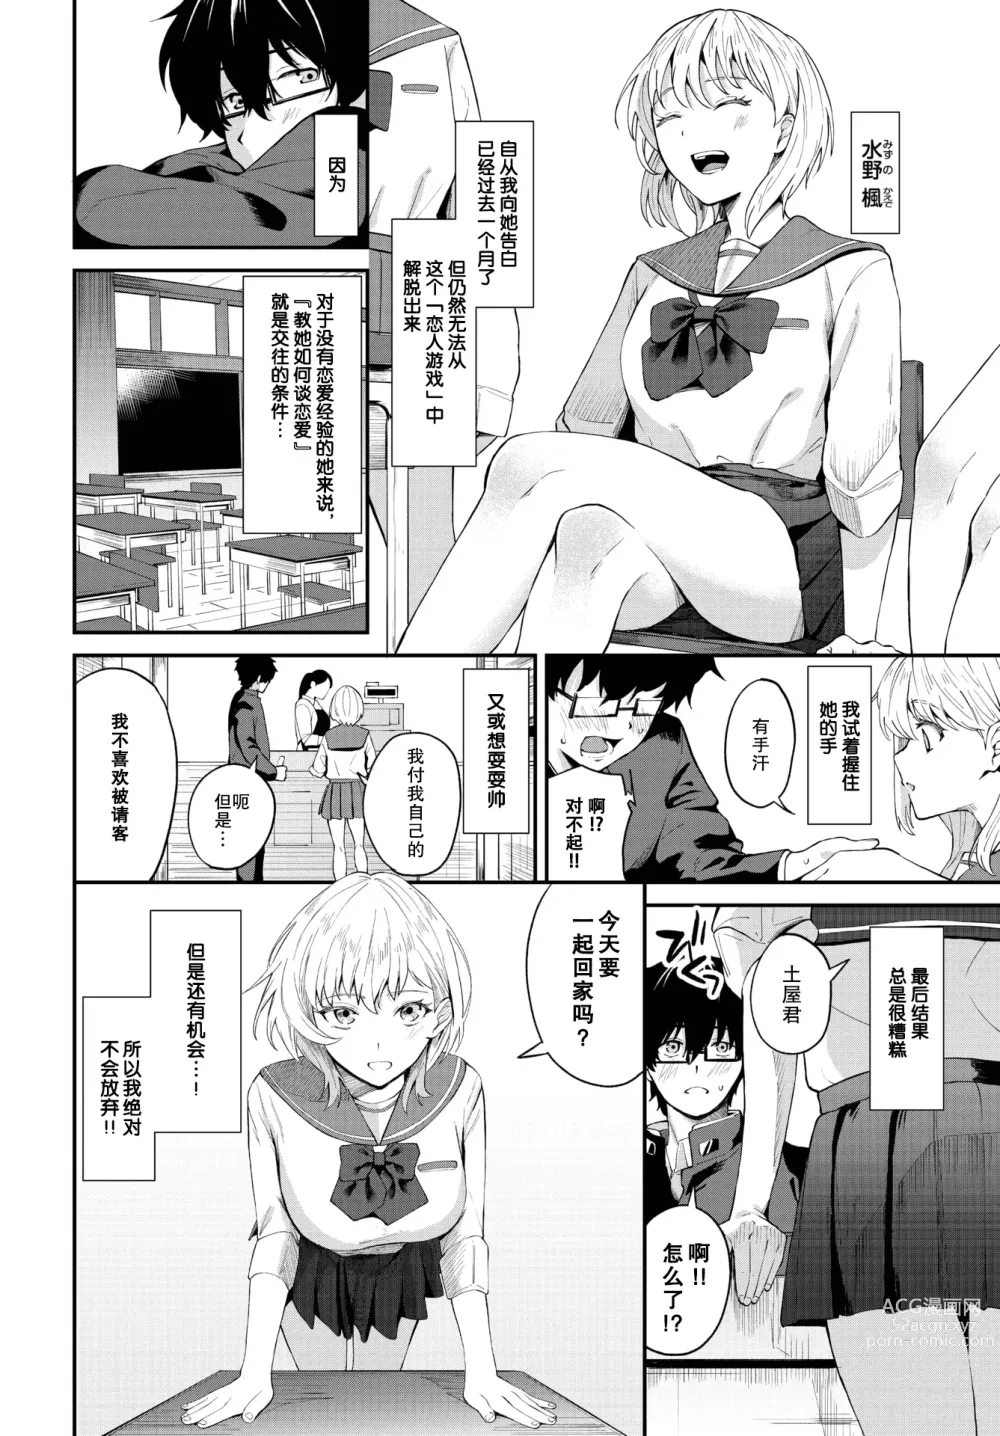 Page 3 of manga koi domari